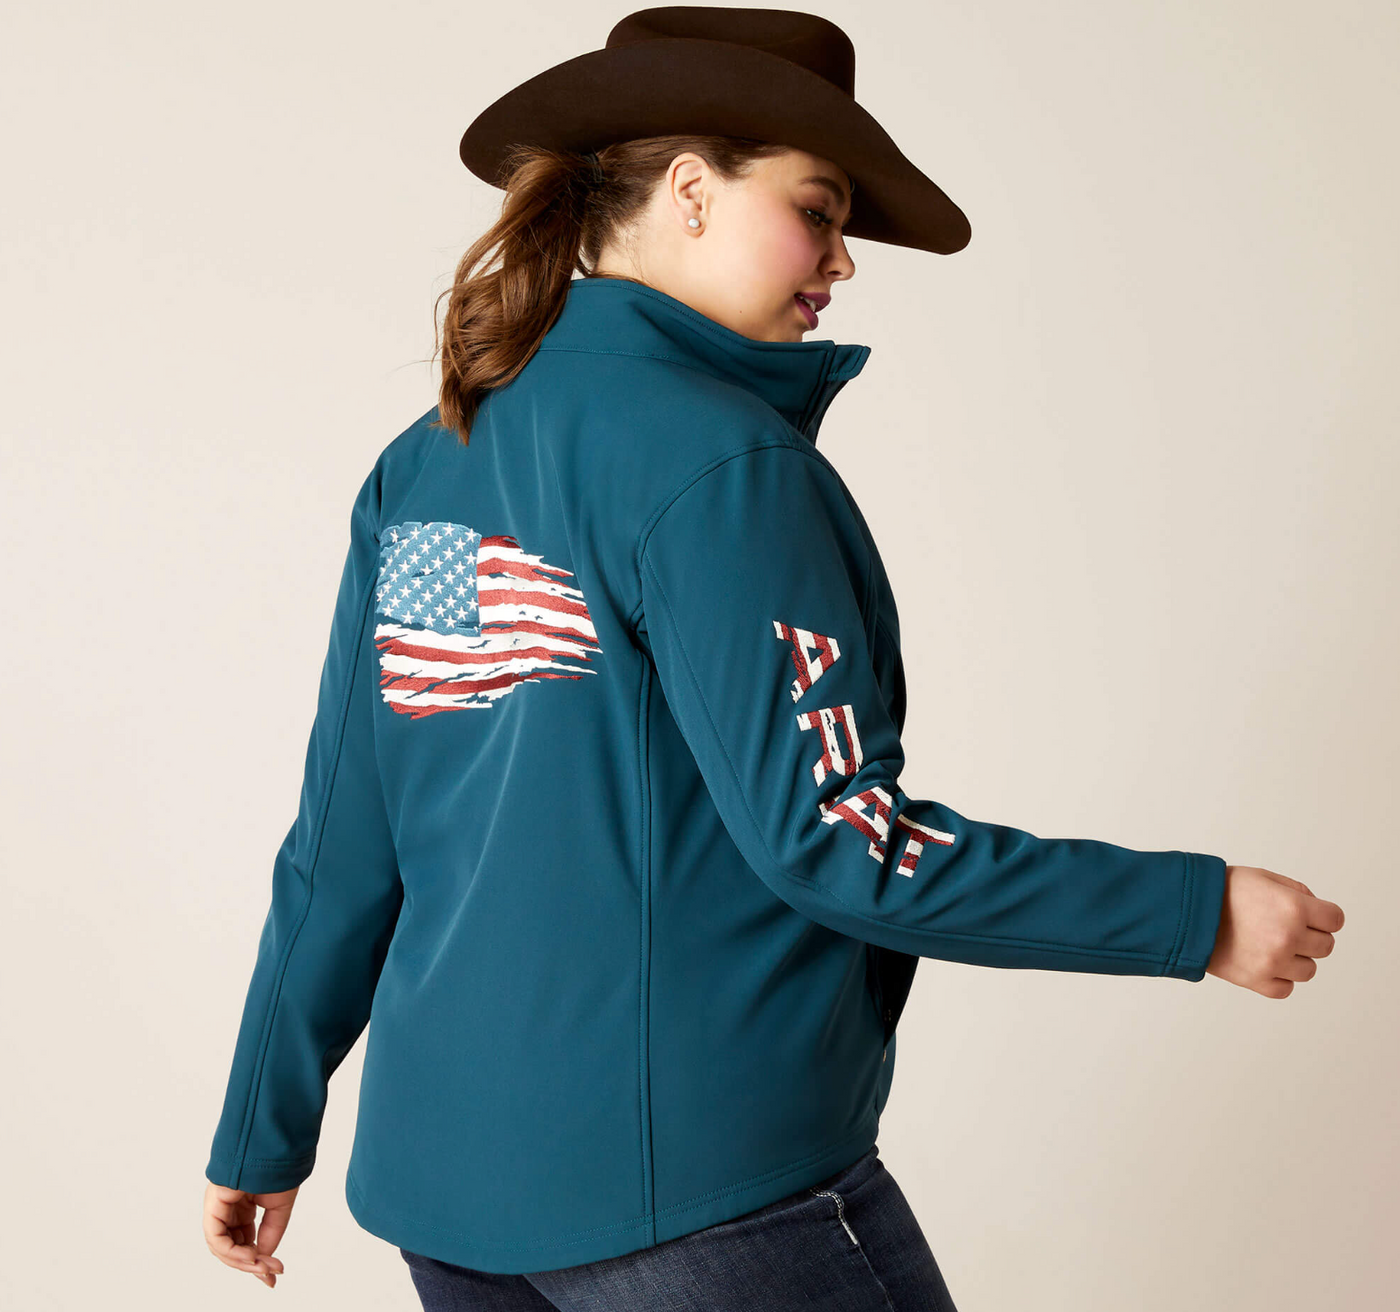 Women's Patriot Team Conceal Carry Jacket